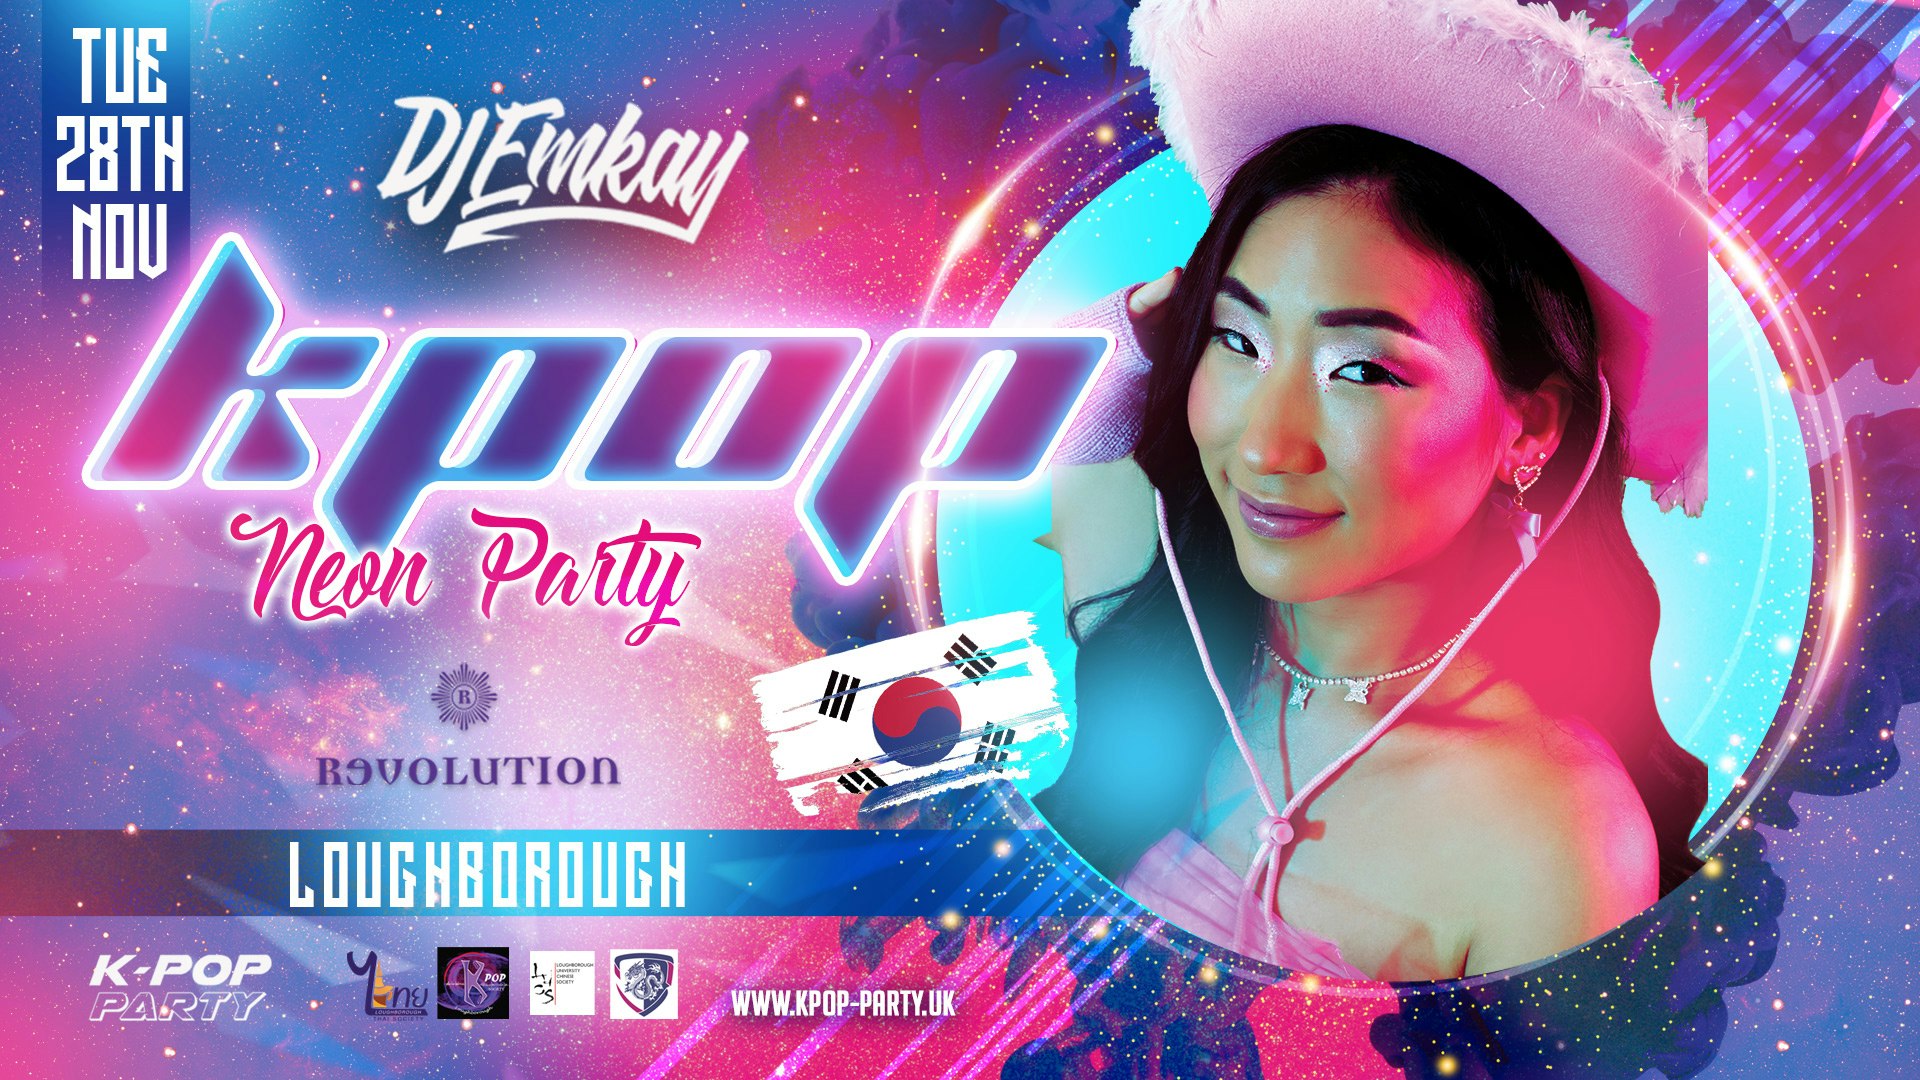 K-Pop NEON Party Loughborough – DJ EMKAY | Tuesday 28th November